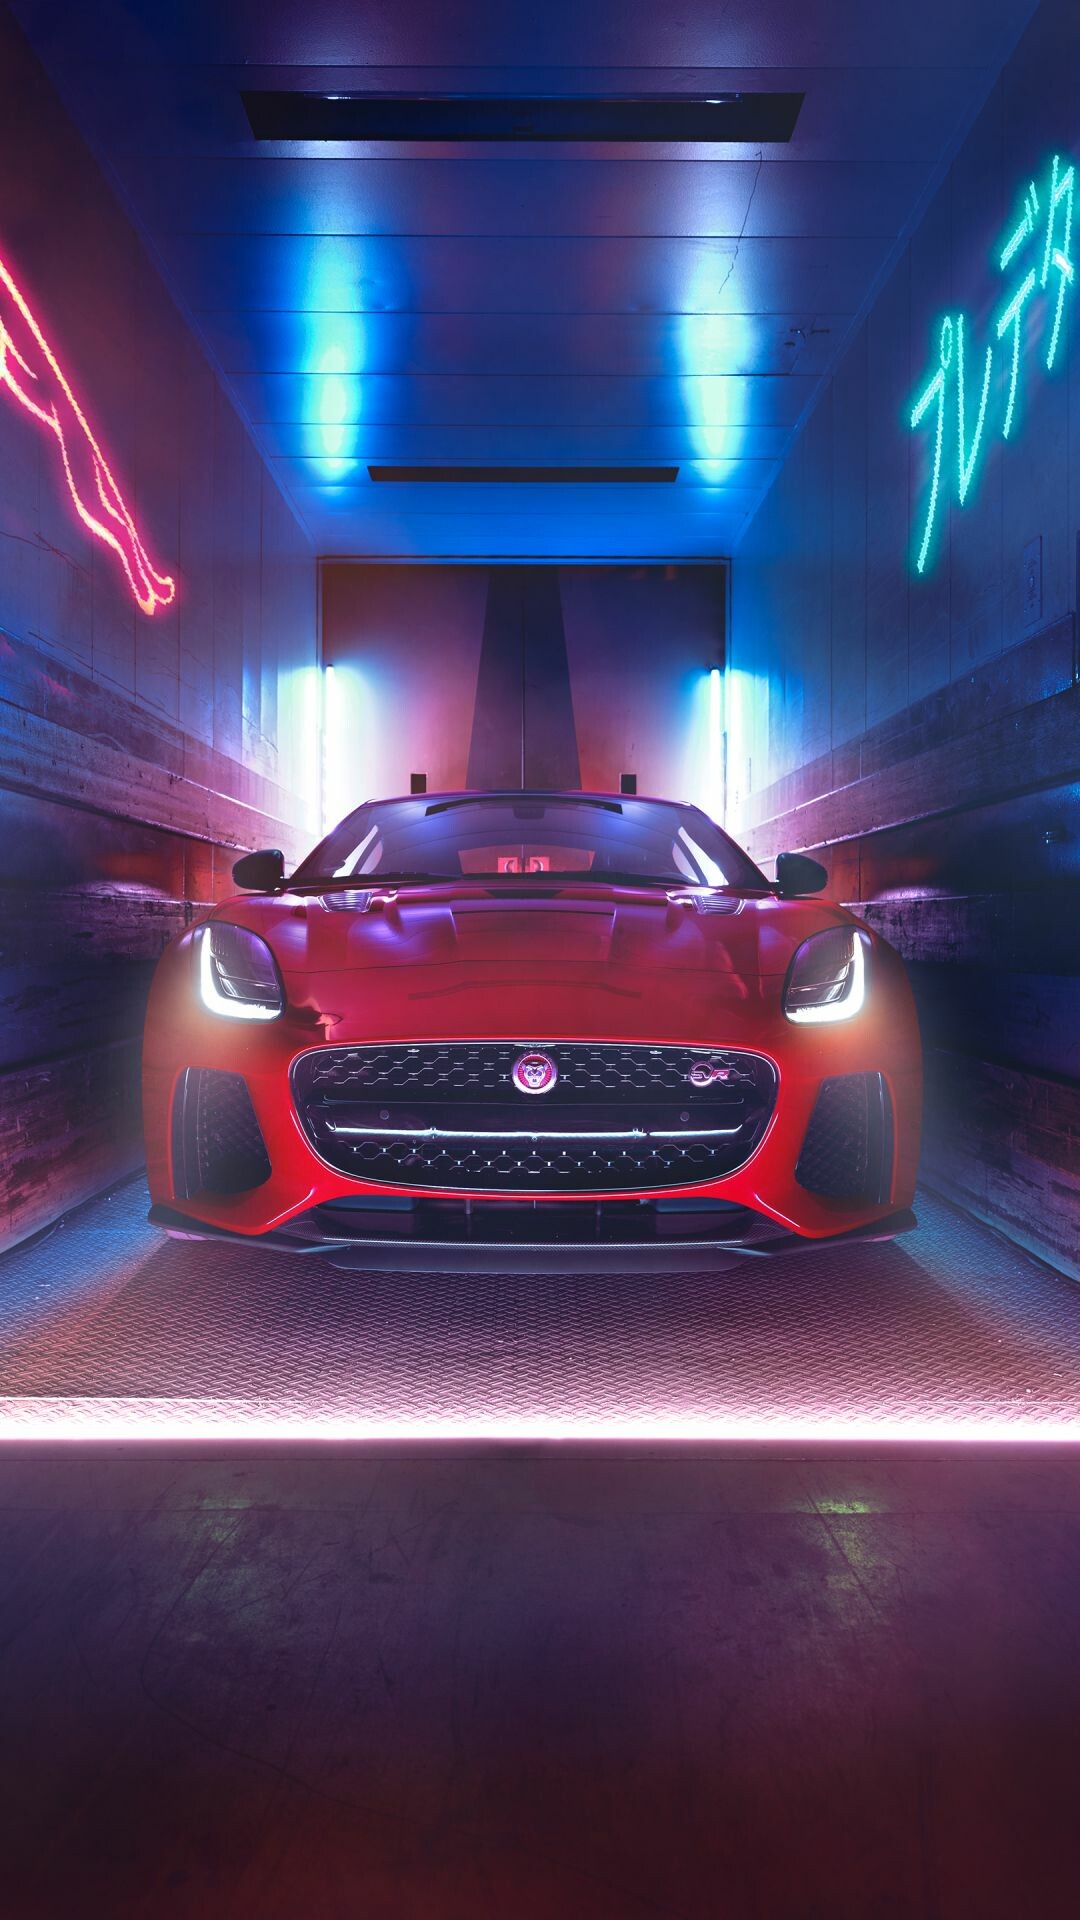 Jaguar Cars: Vehicle company, Owned by the larger company Tata Motors, Vehicles. 1080x1920 Full HD Wallpaper.